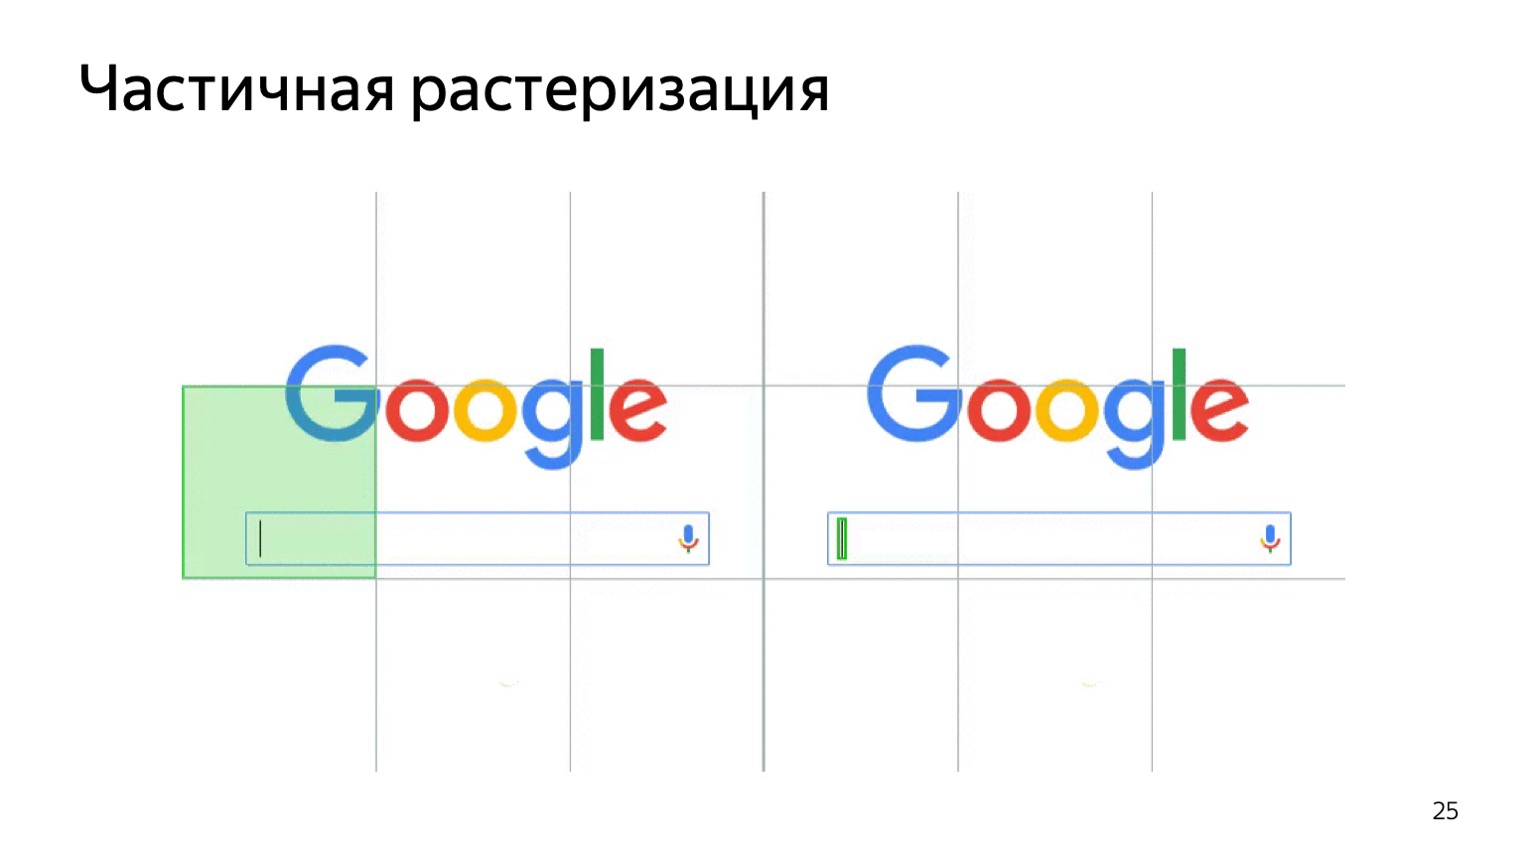 Как рисует браузер. Доклад Яндекса - 24